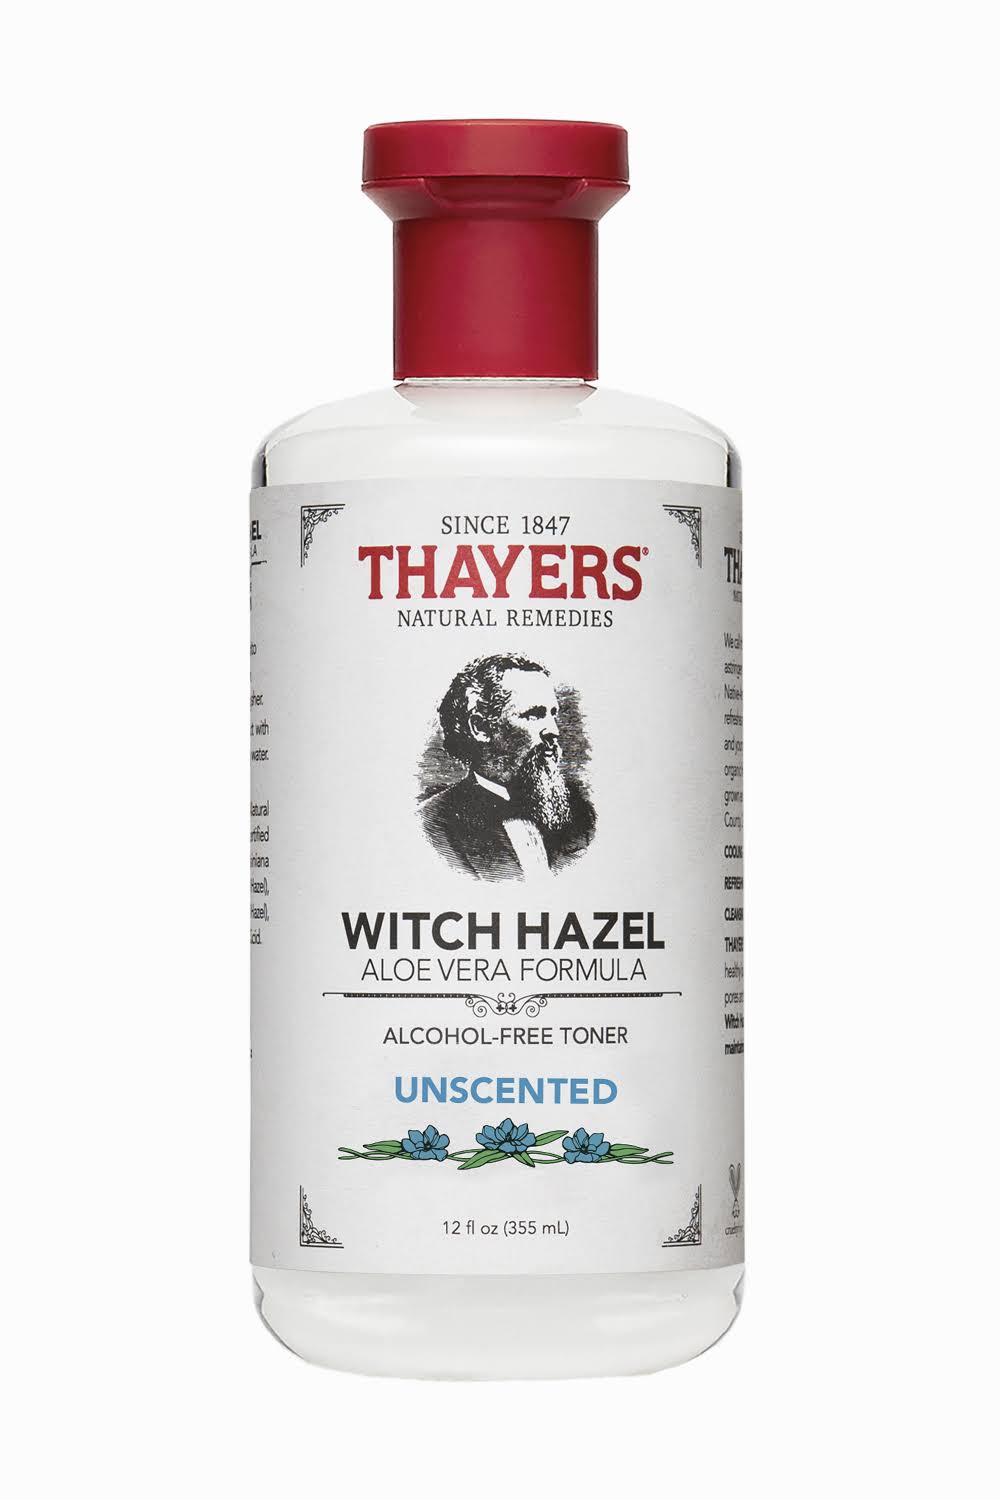 Thayers Witch Hazel with Aloe Vera Toner - Unscented - 12 fl oz